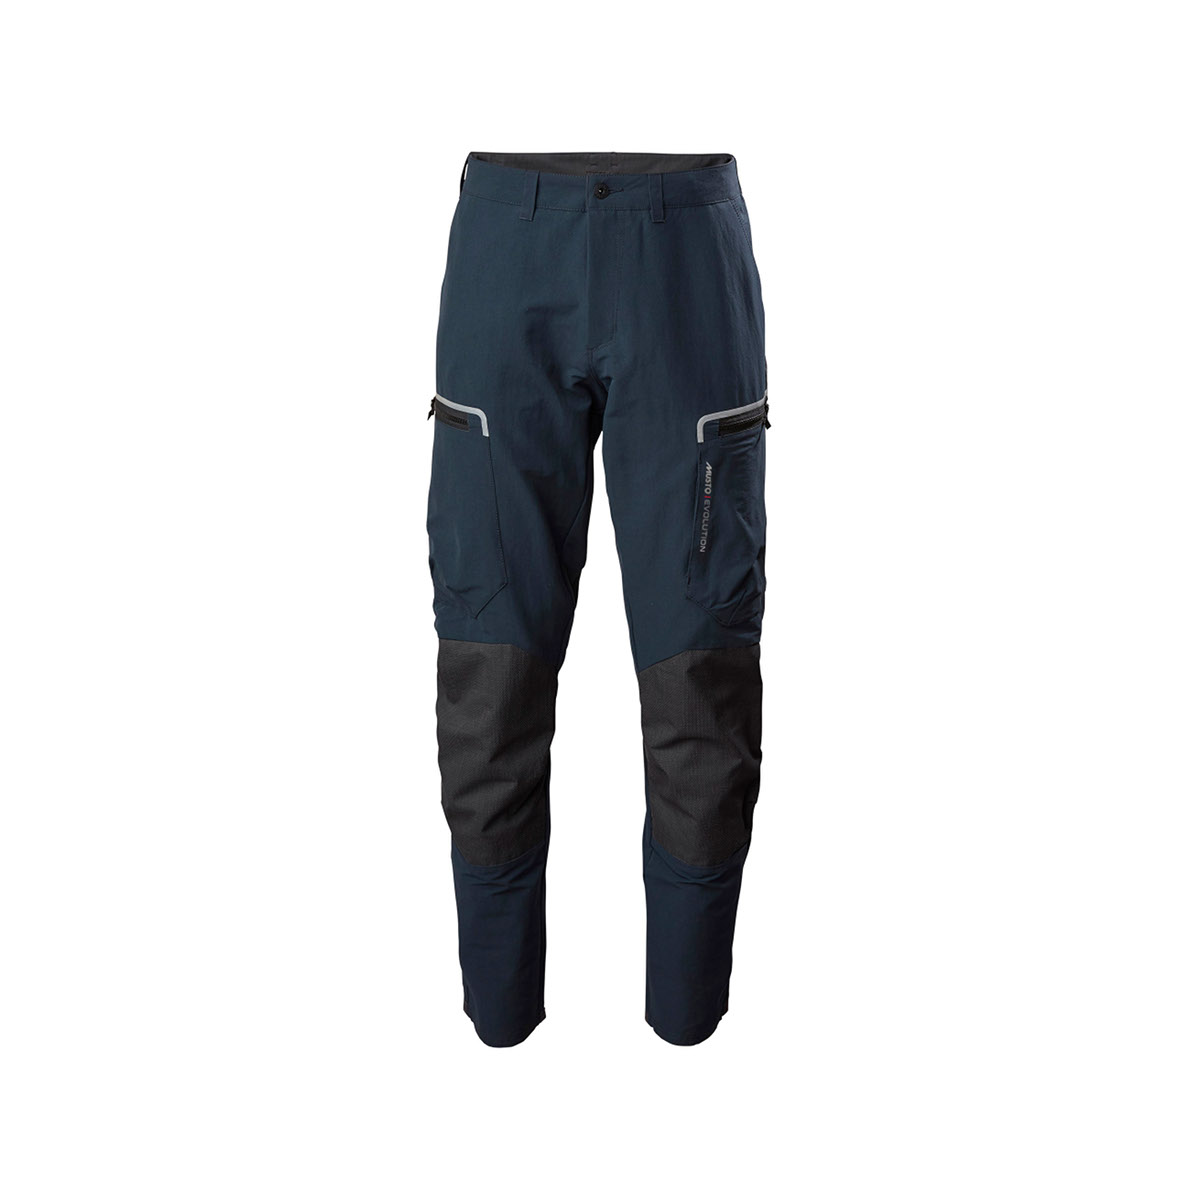 Musto Evolution Performance pantalon 2.0 bleu marine, taille 38